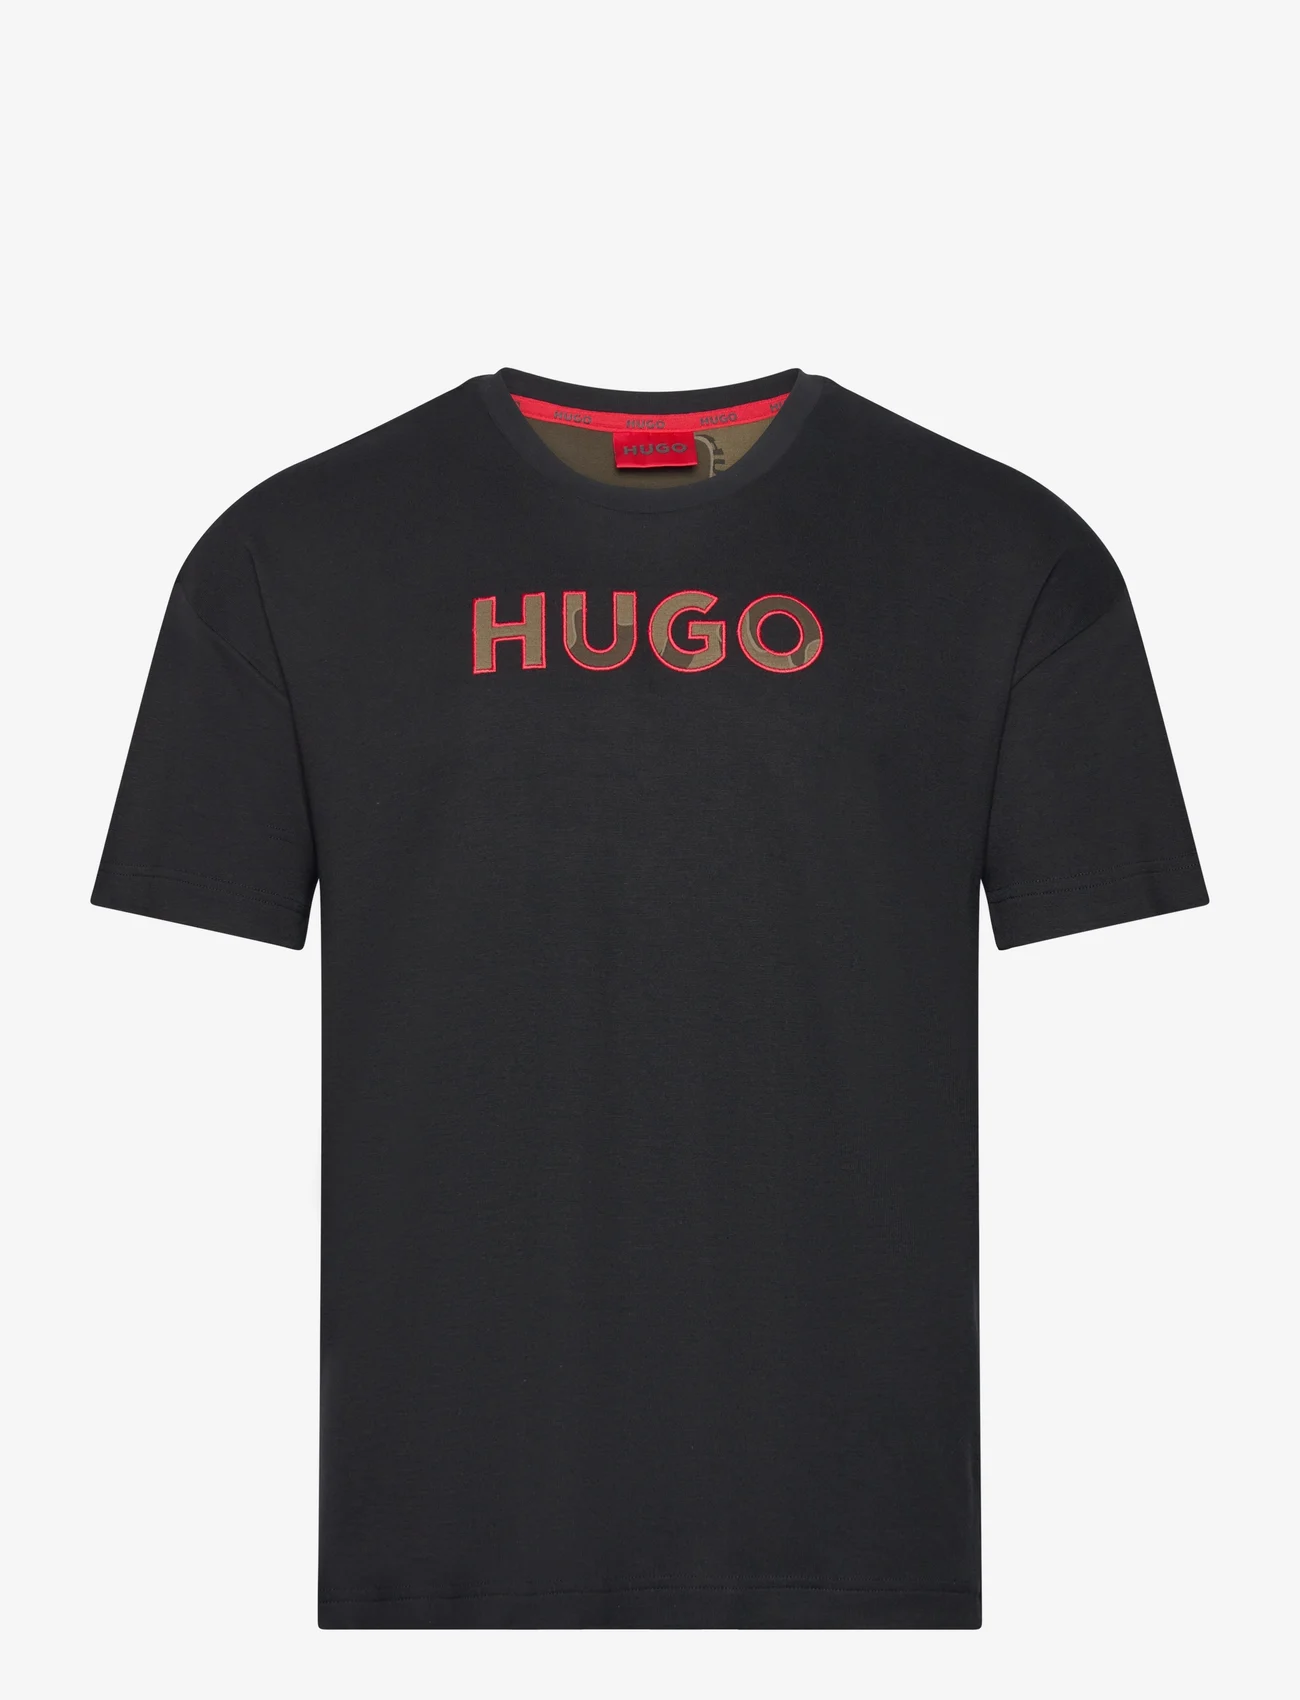 HUGO - Camo T-Shirt - korte mouwen - black - 0